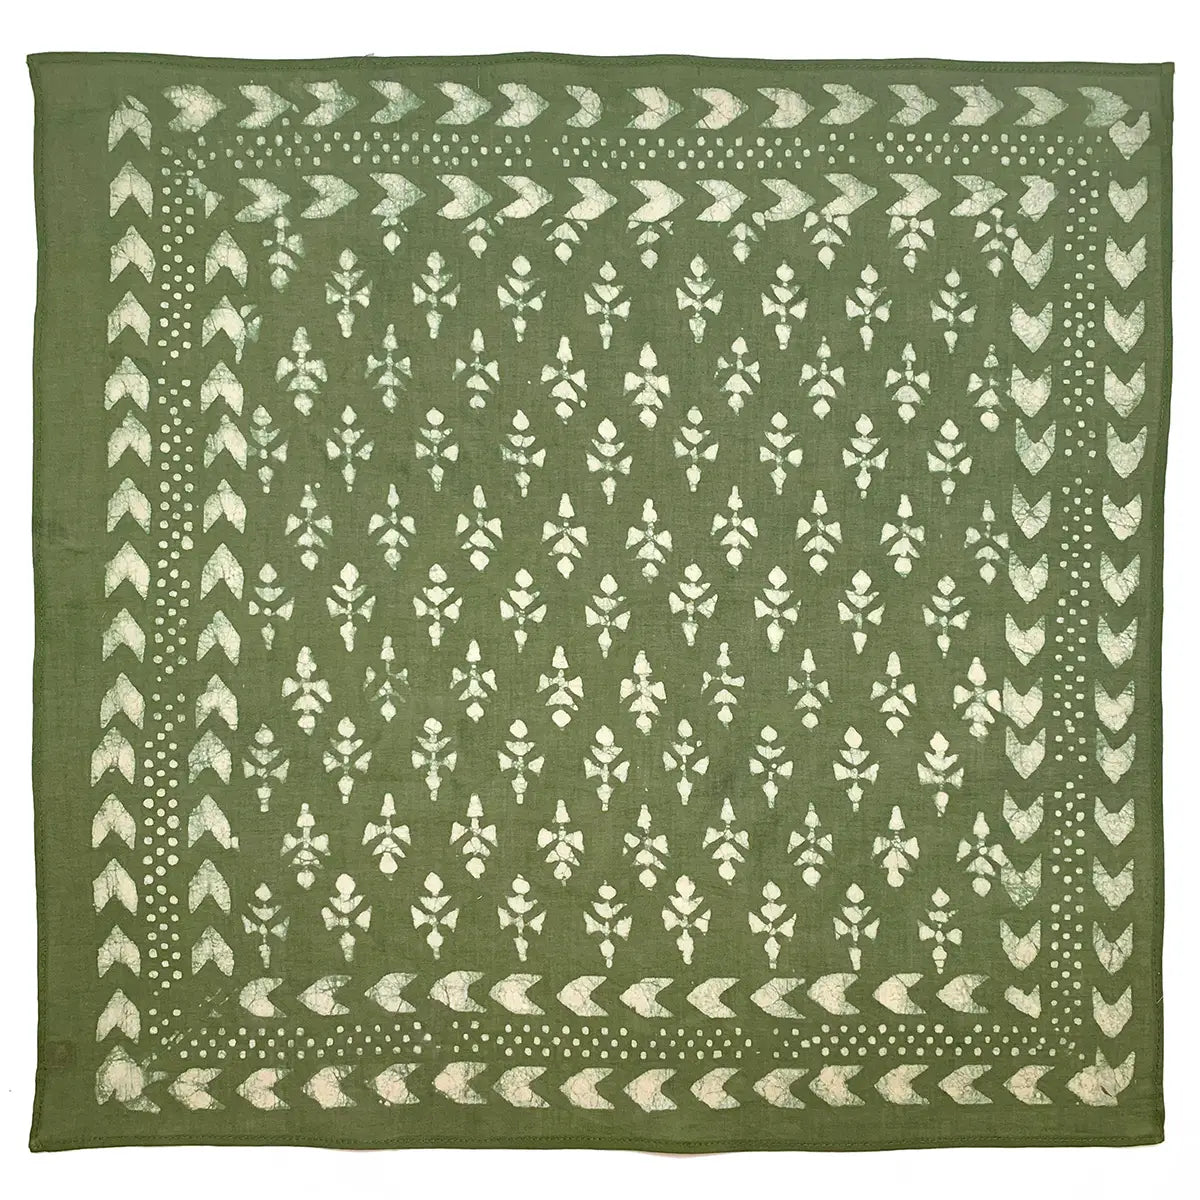 Anju Jewelry | Block Printed Bandana - Green Floral with Arrow Border